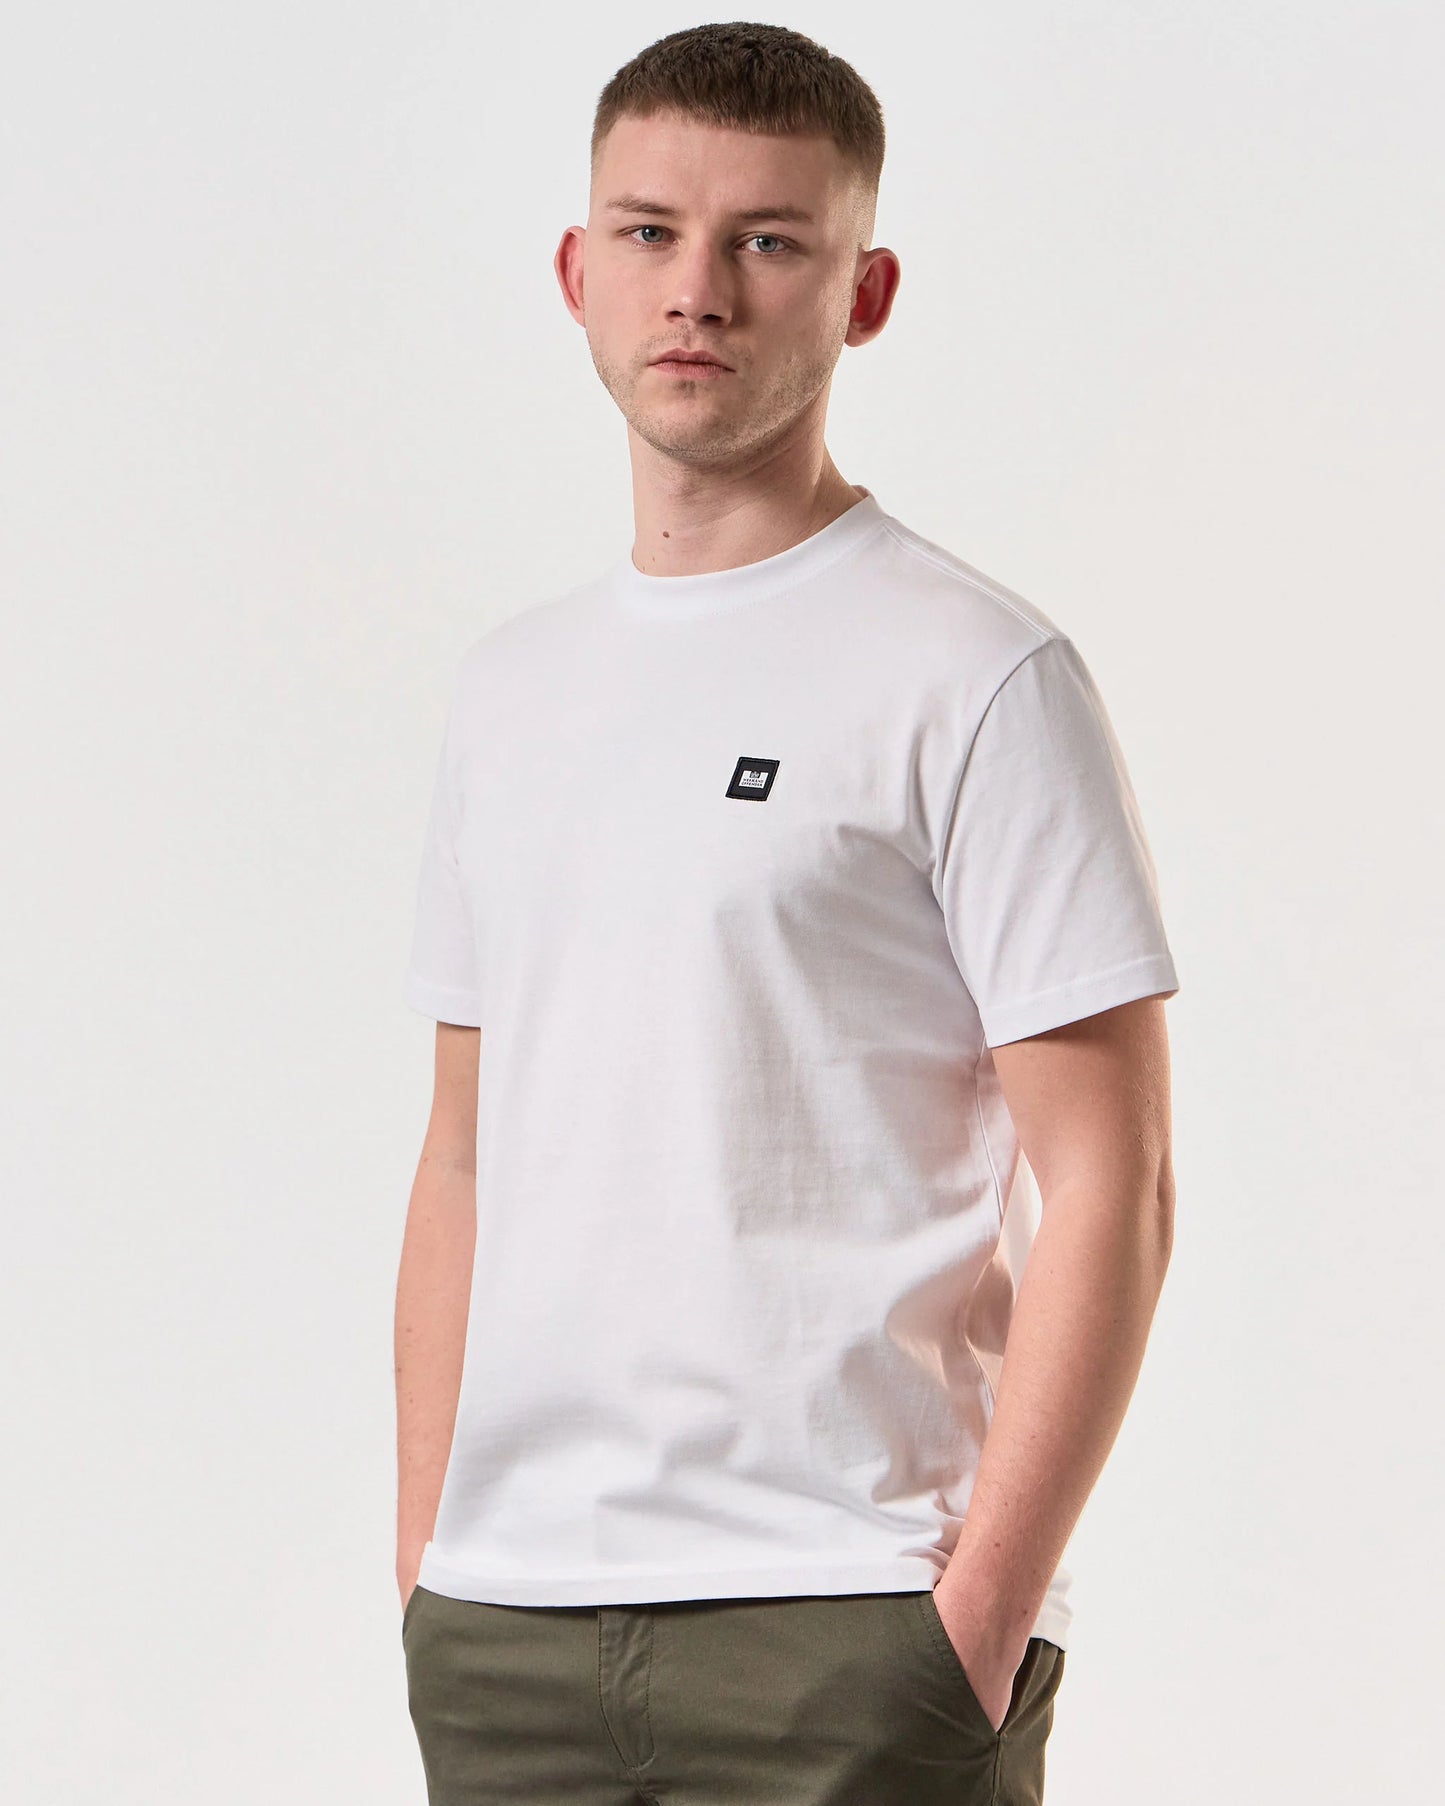 Weekend Offender- Cannon Beach T-Shirt White